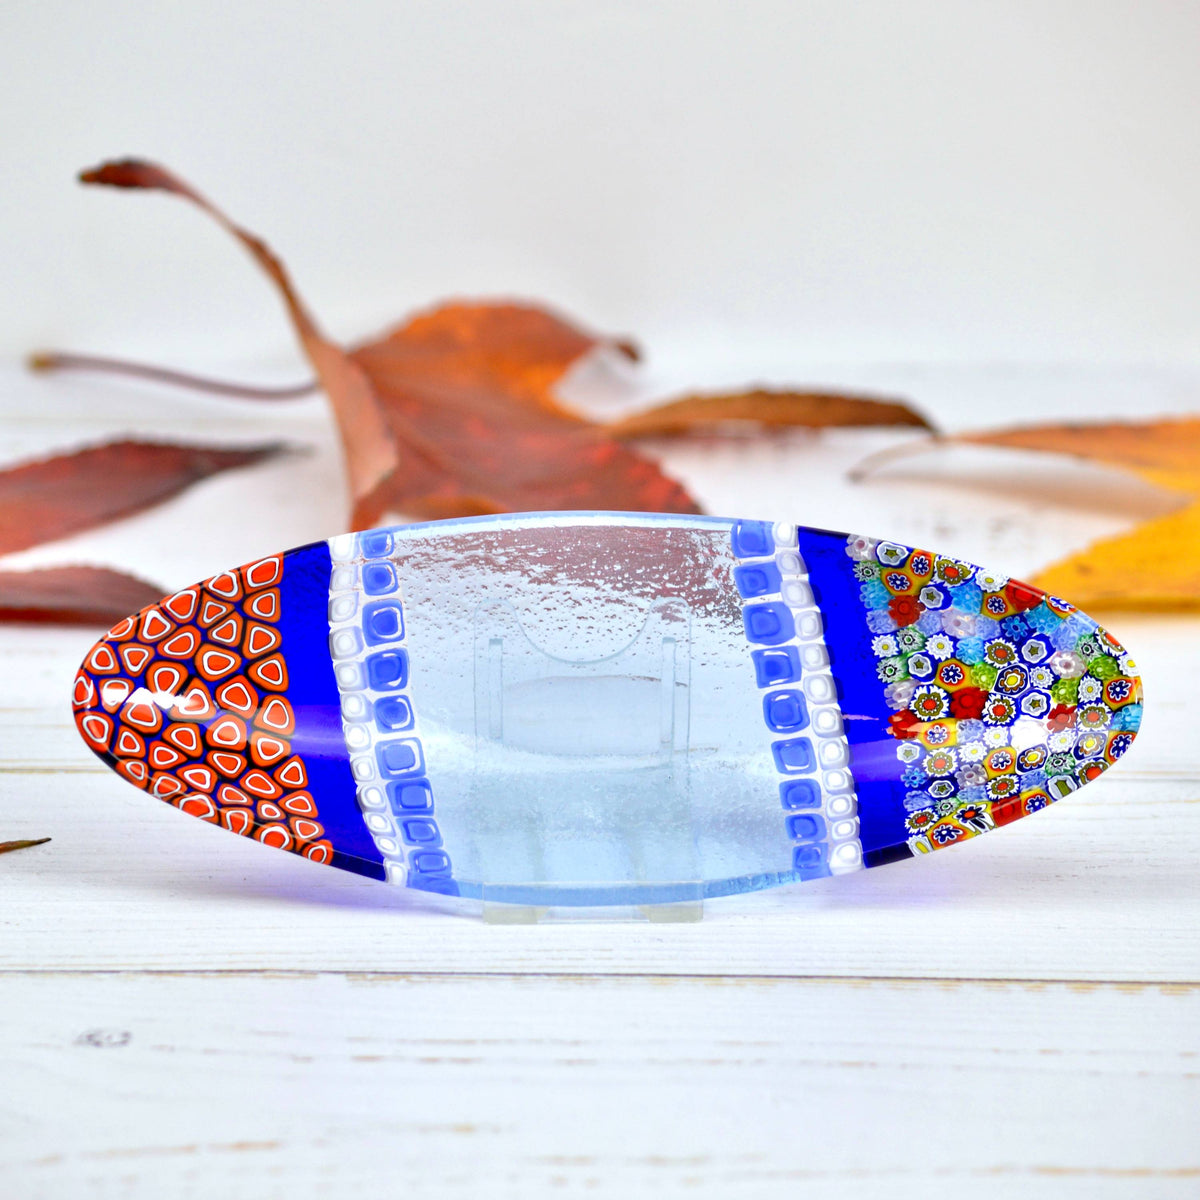 Small Oval Shaped Murano Glass Dish With Millefiori - My Italian Decor